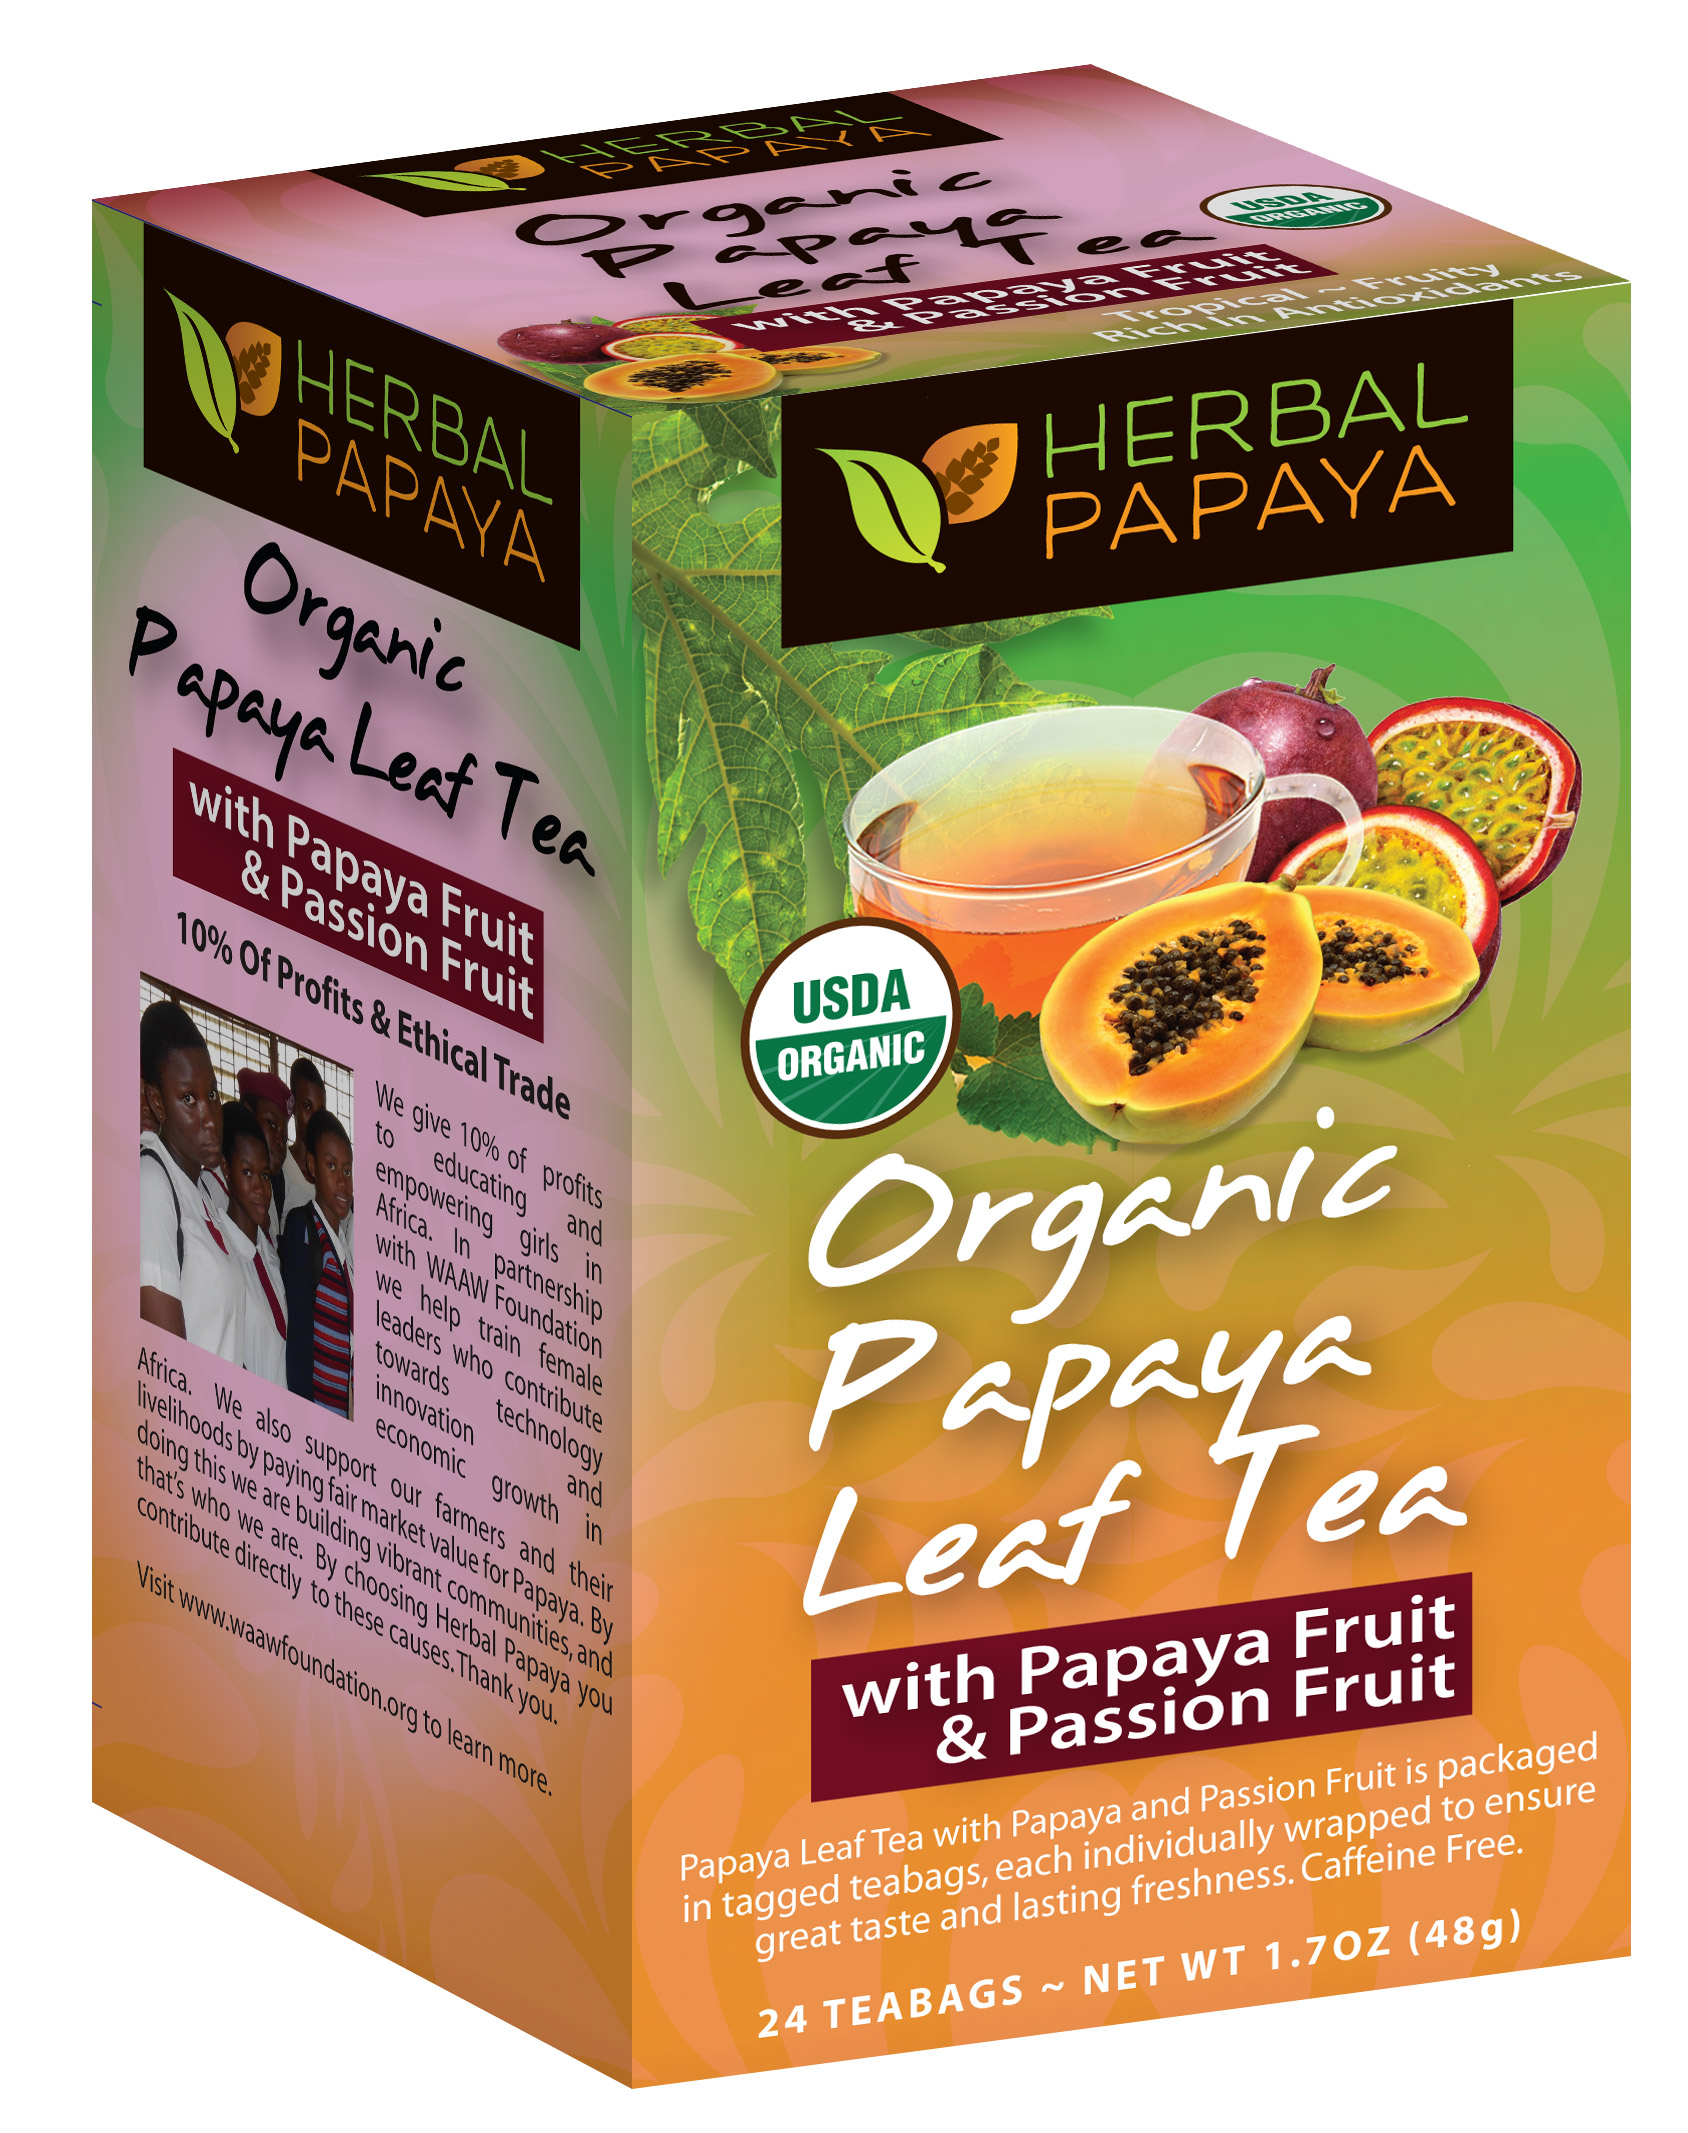 Organic Papaya Leaf Tea with Papaya Fruit and Passion Fruit